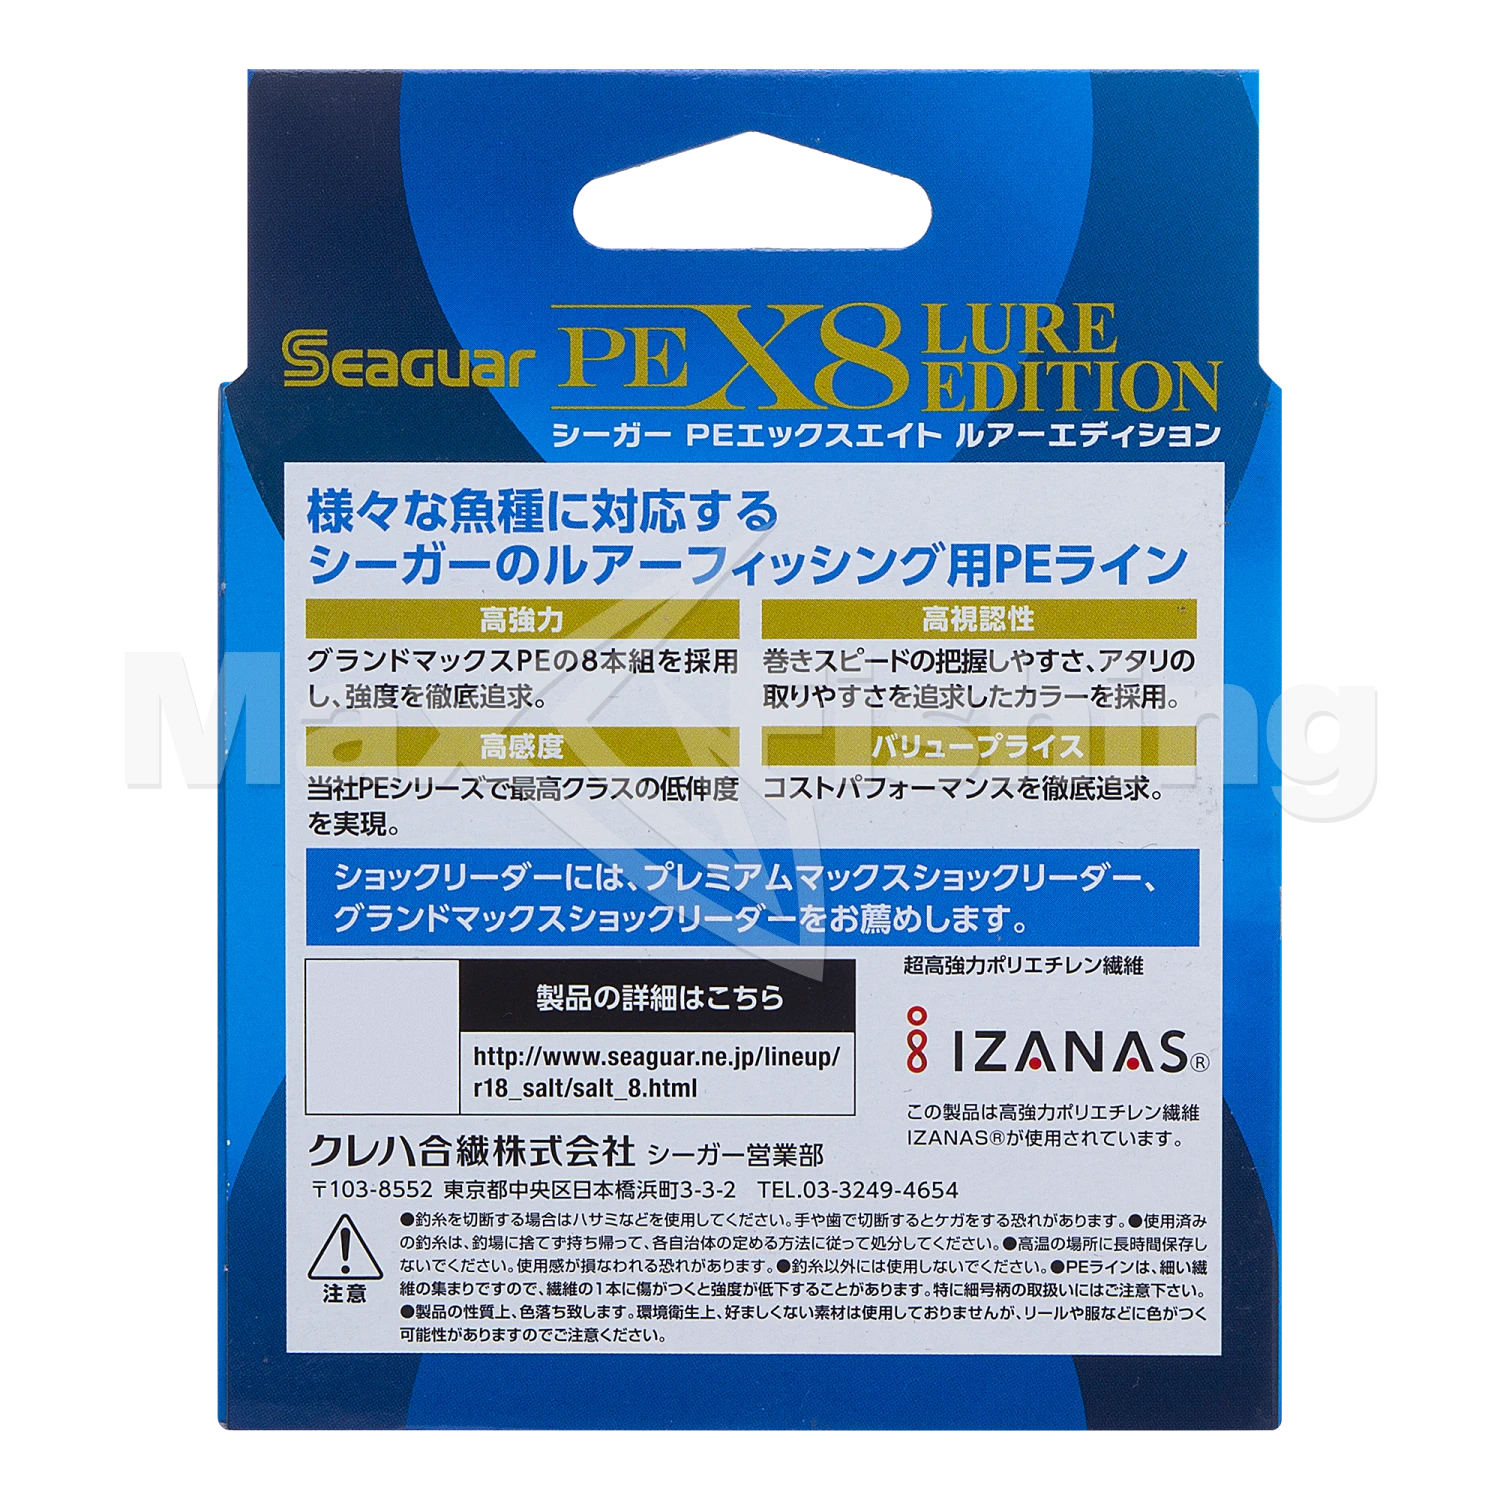 Шнур плетеный Seaguar PE X8 Lure Edition #1,5 0,205мм 150м (multicolor)